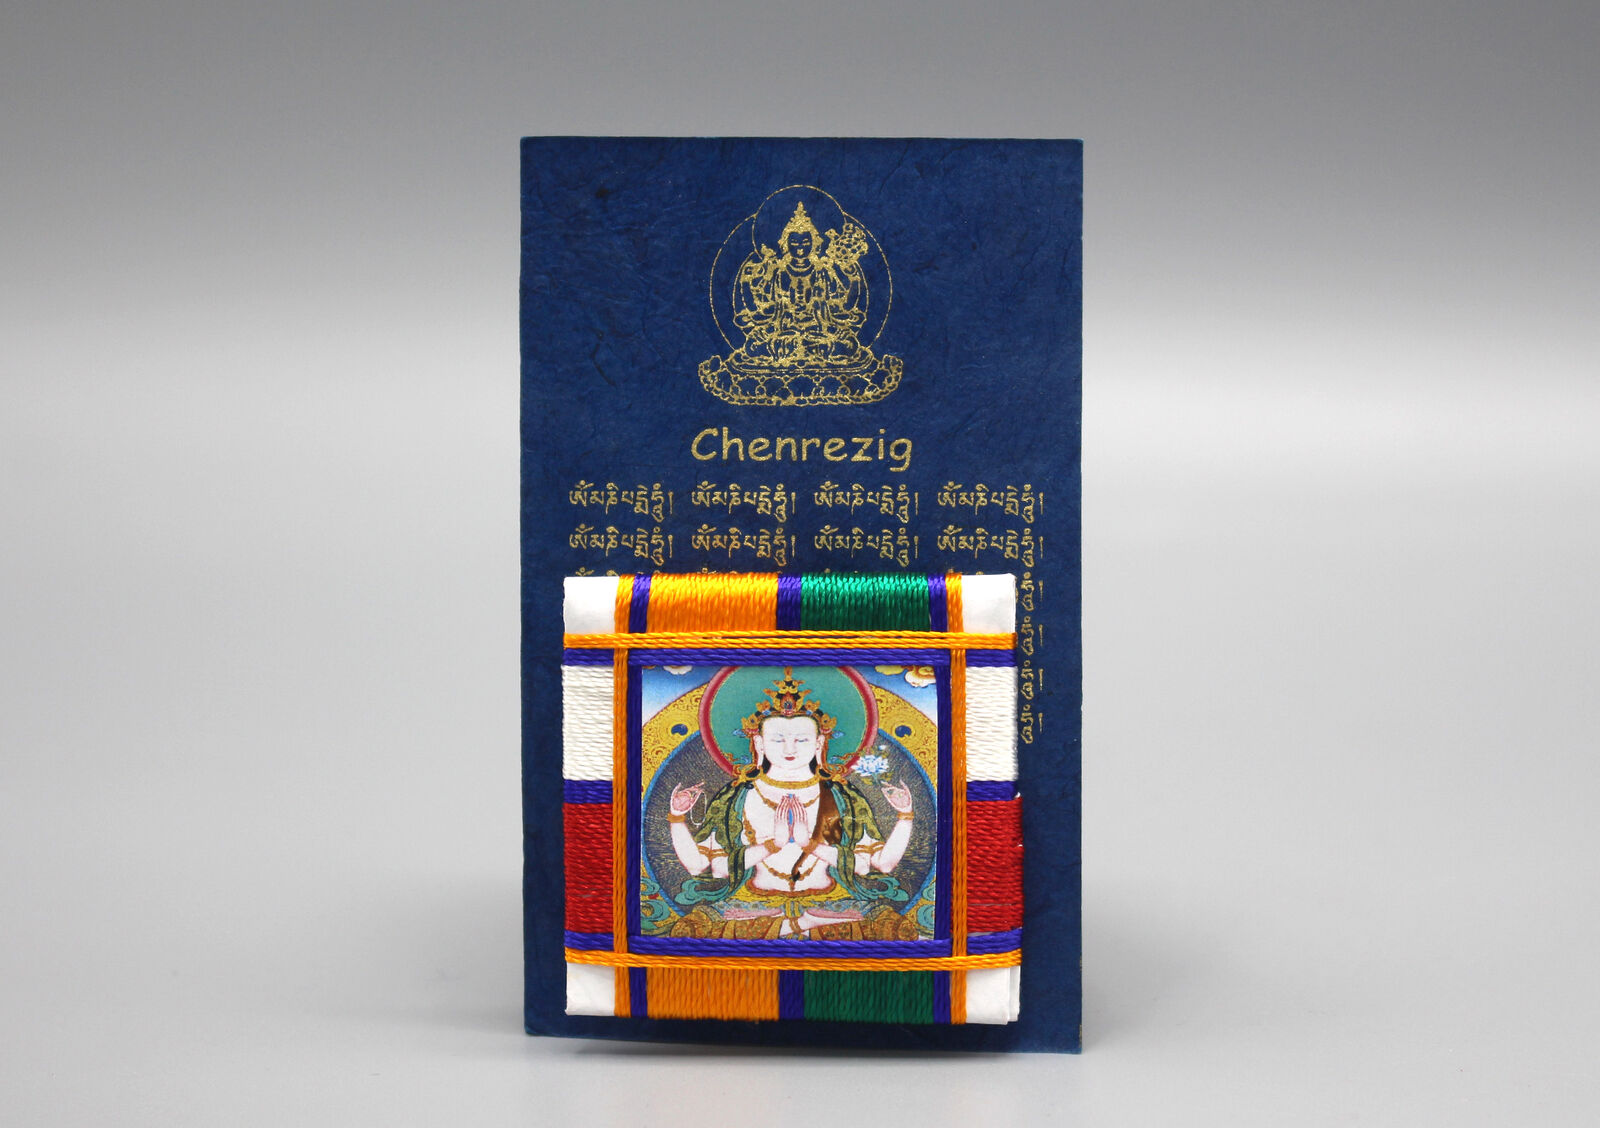 Chenrezig Door Protection Ritual Item-Goh Sung-Protector Mantra